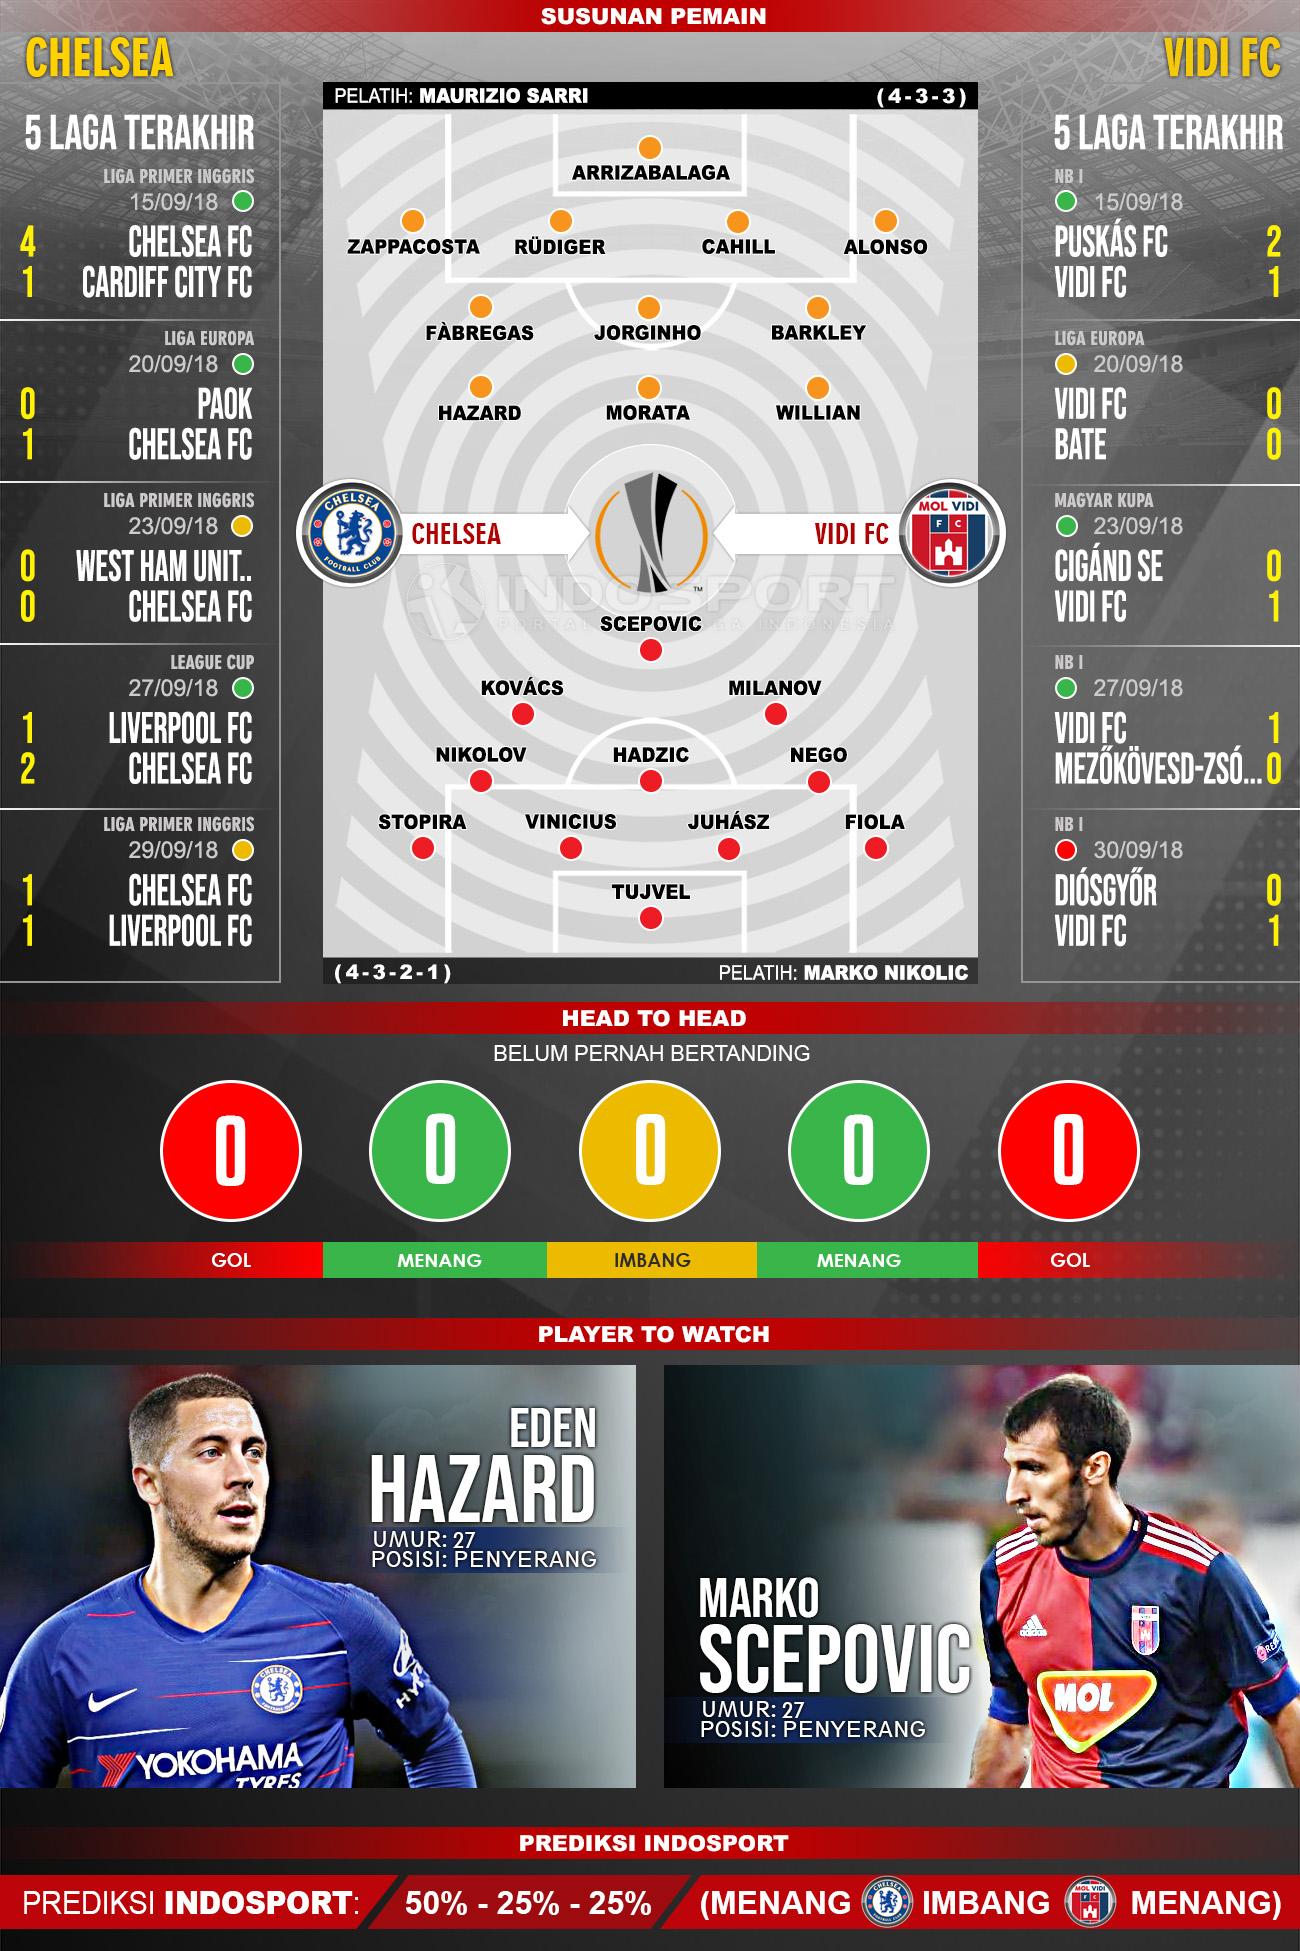 Chelsea vs Vidi FC (Susunan Pemain - Lima Laga Terakhir - Player to Watch - Prediksi Indosport) Copyright: Indosport.com